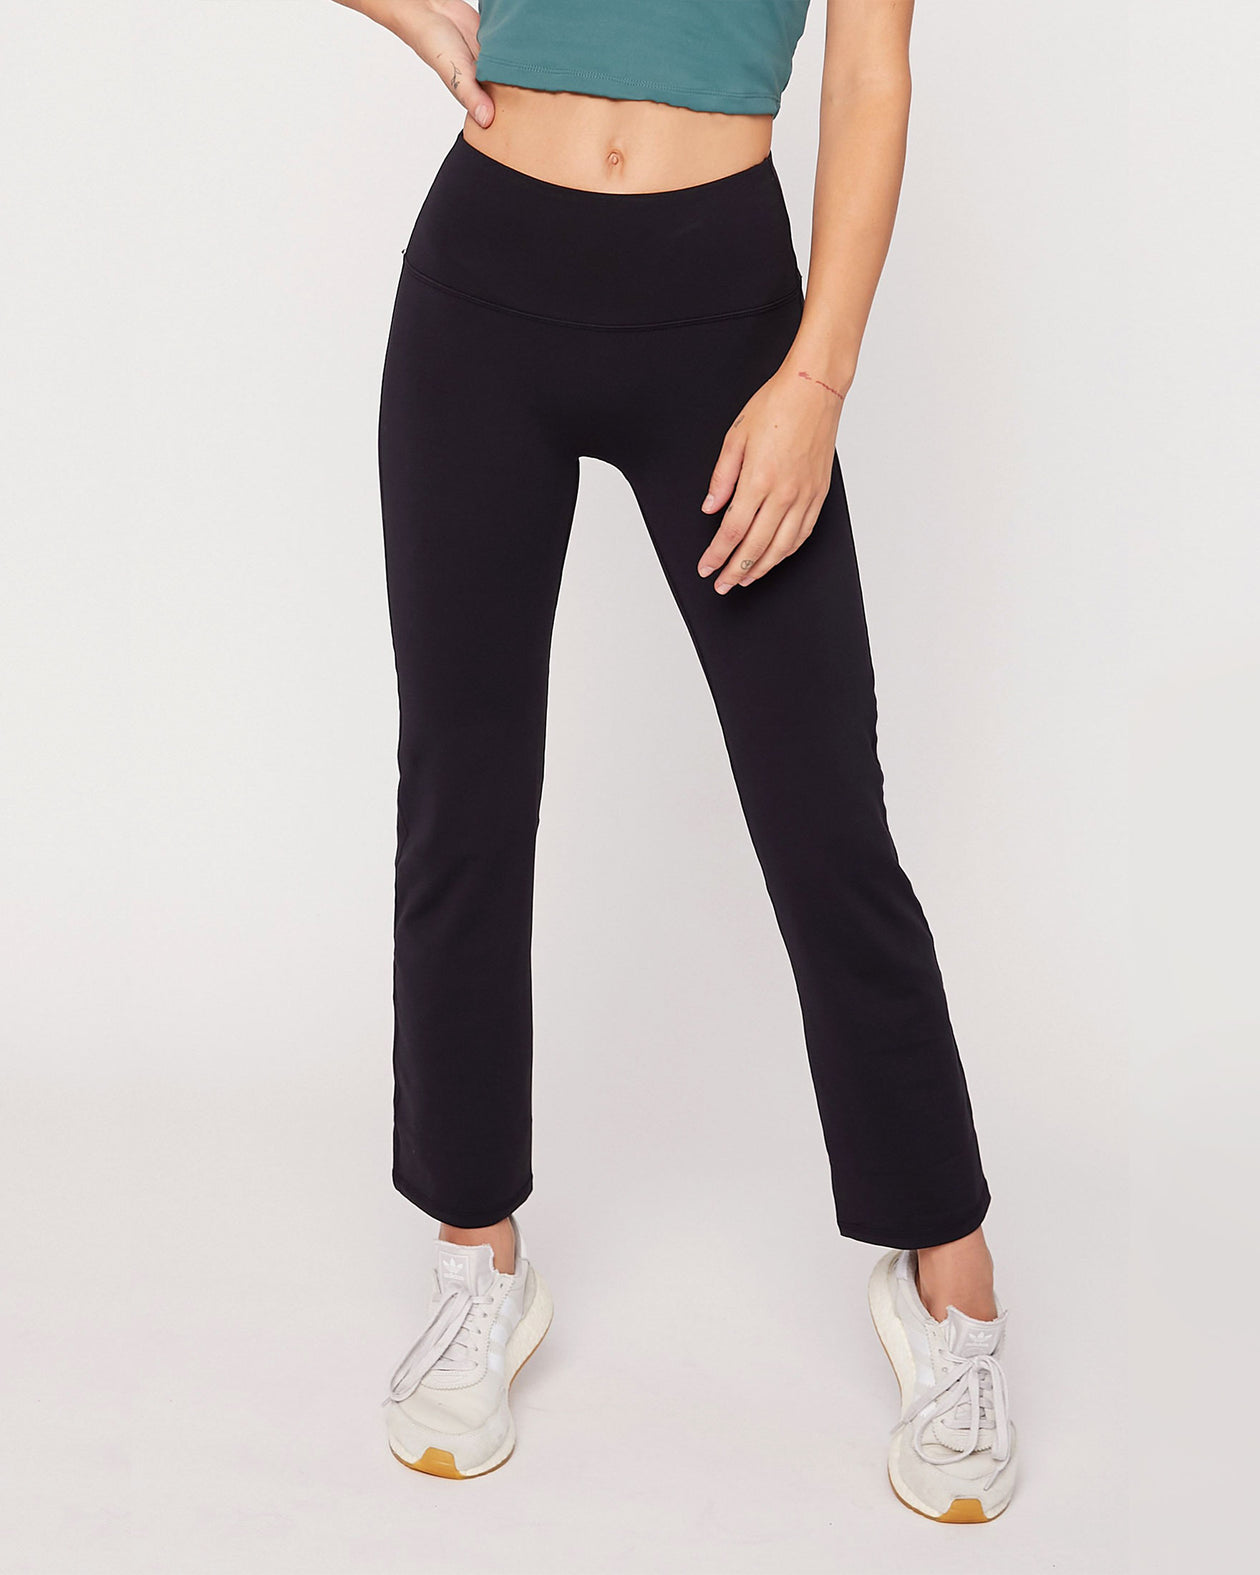  2 Back Pockets,Womens Bootcut Yoga Pants Flare Workout Pants,31,Black,Size  XXL